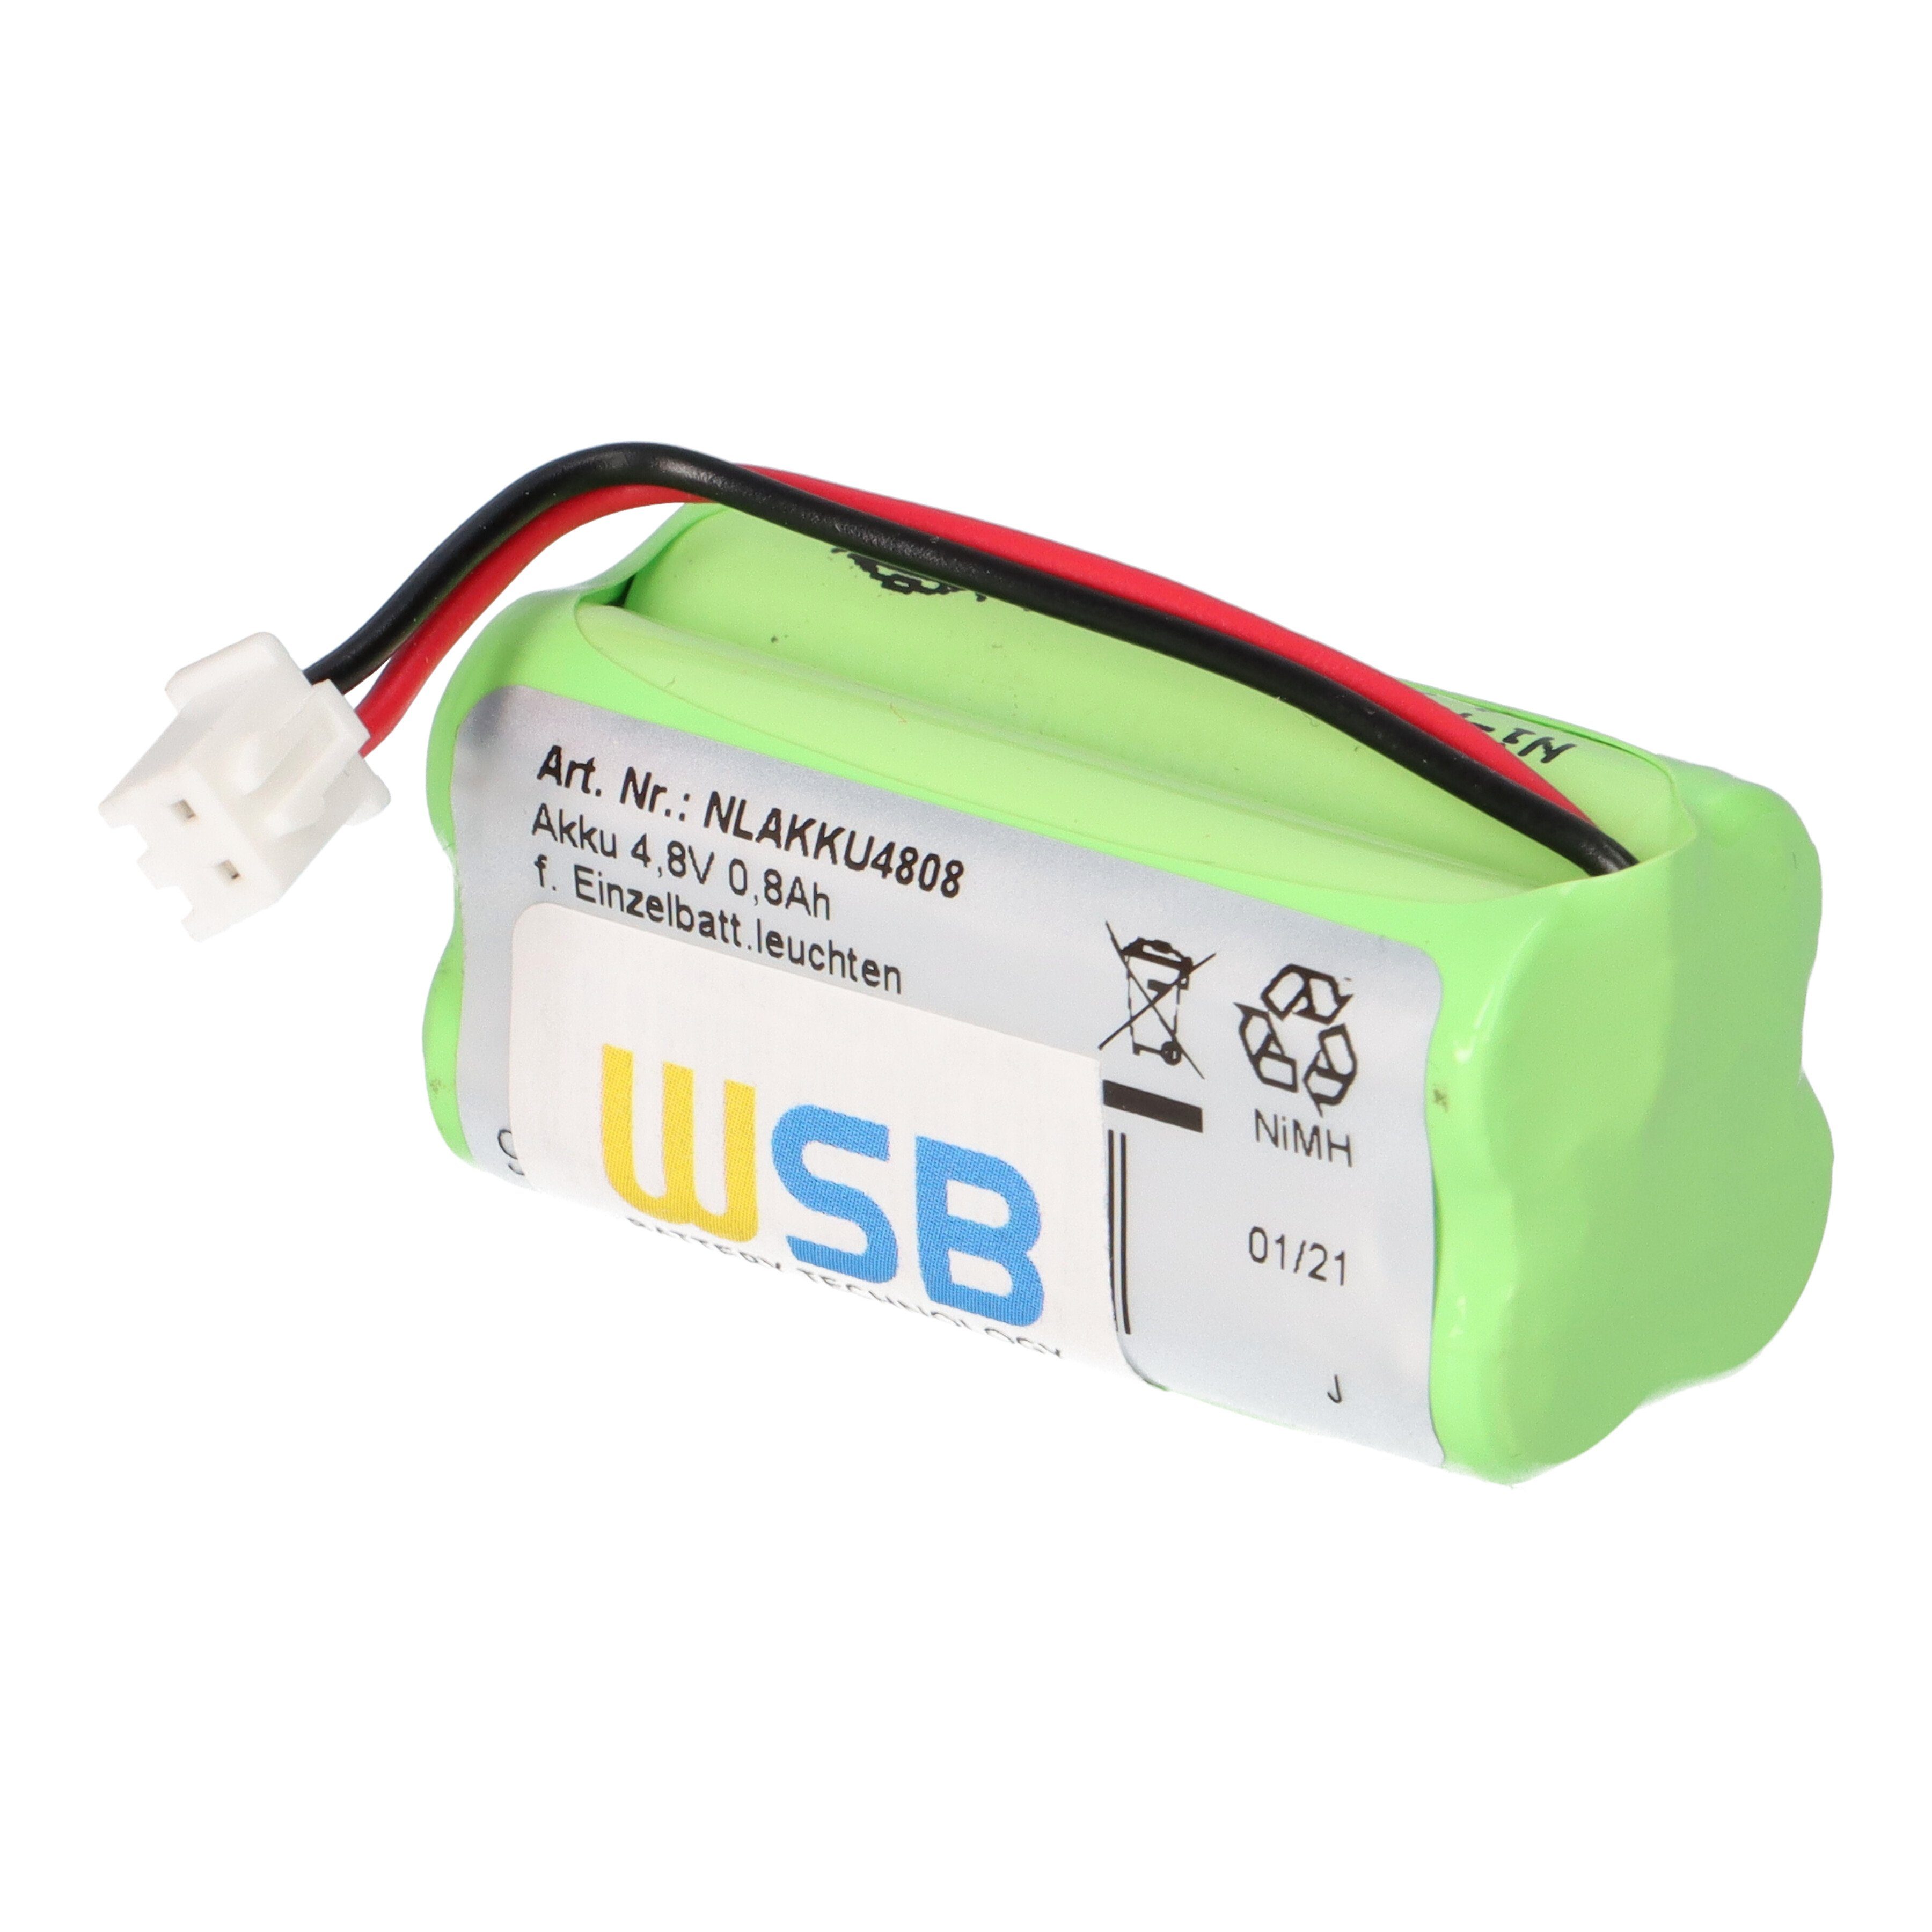 WSB Battery AW-0480-0080AAA-NM01 Akkupack Technlology 4,8V kompatibel Akku GmbH Fischer